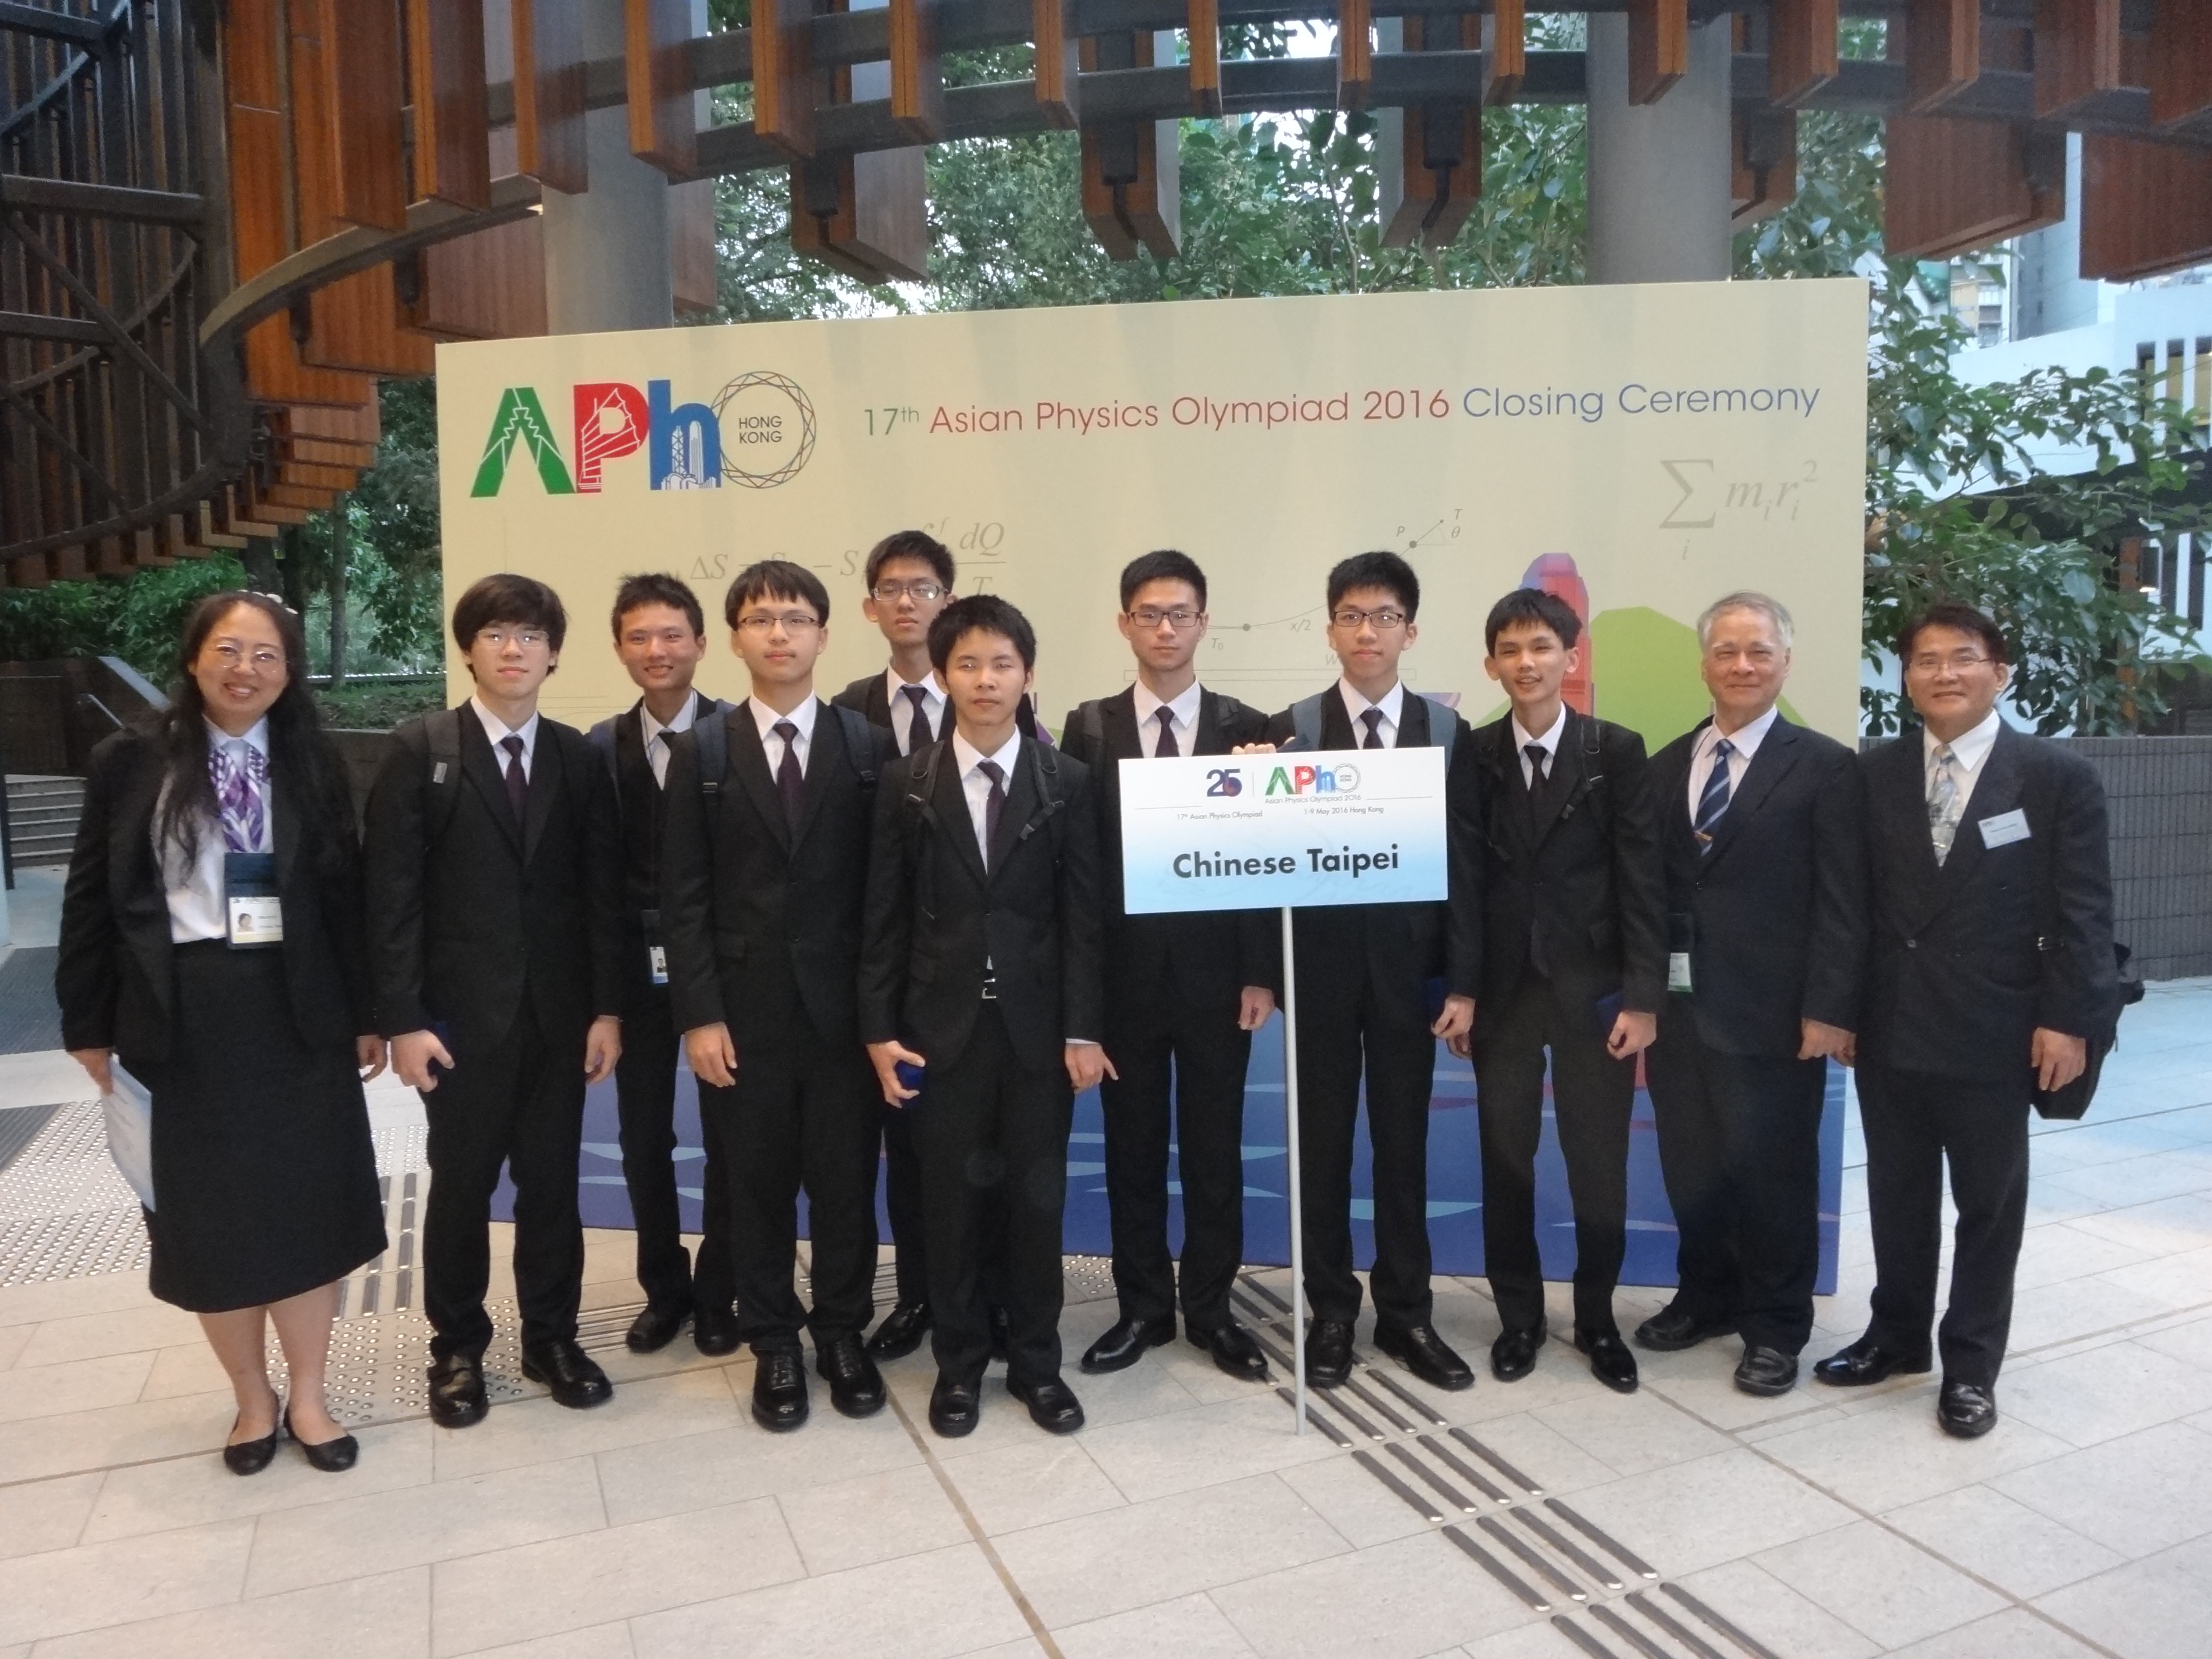 17TH Asian Physics Olympiad 2016